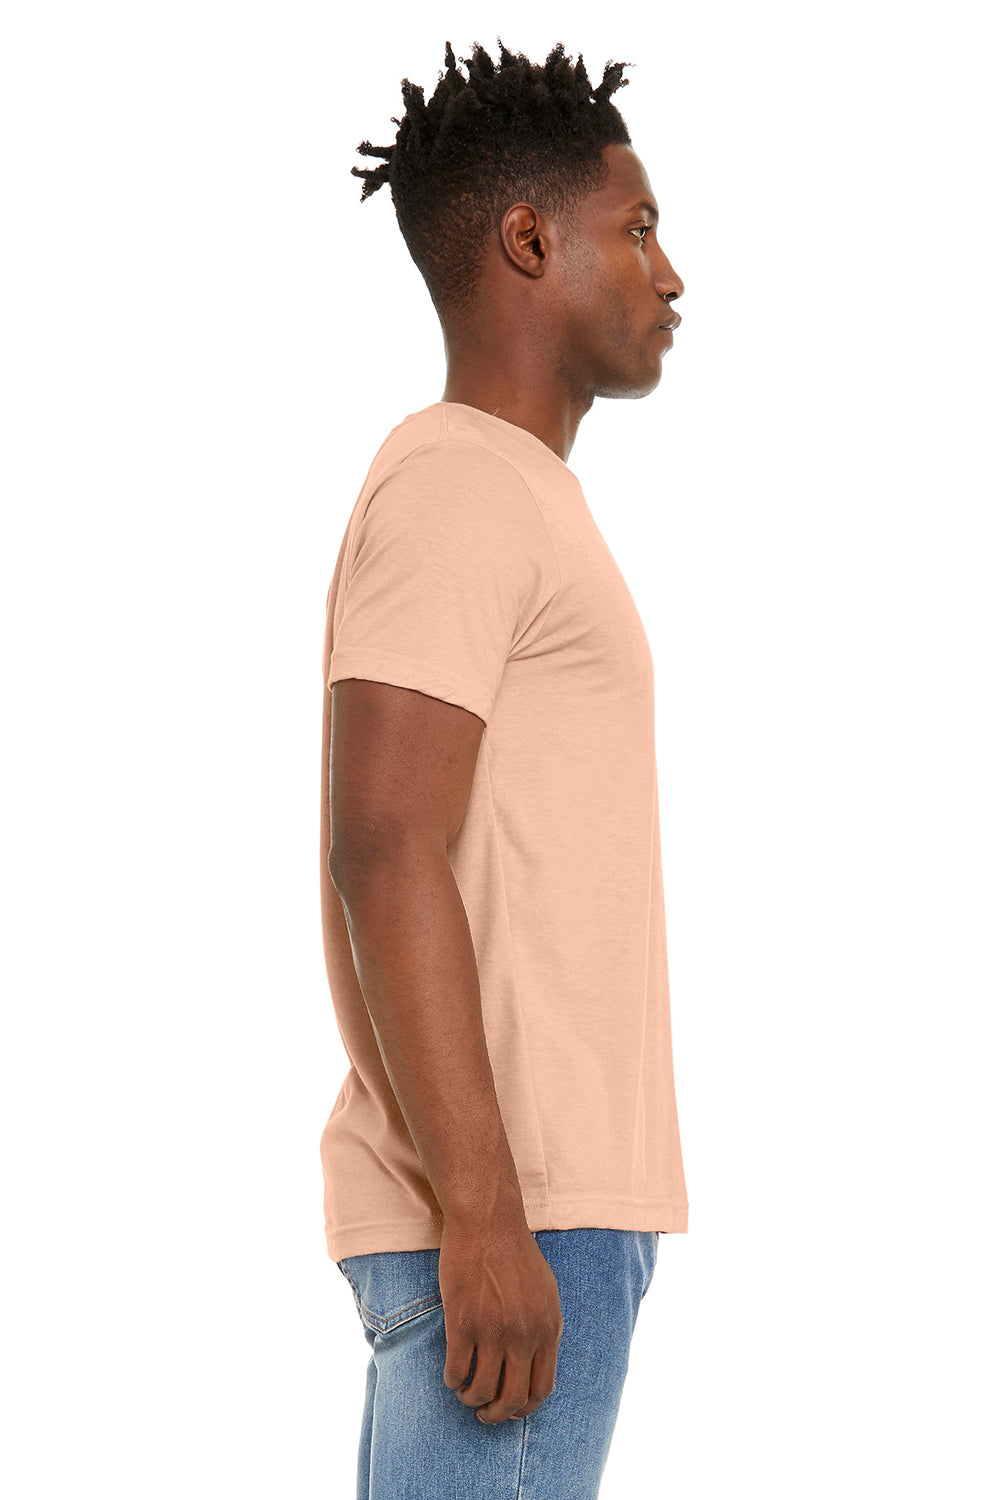 Bella + Canvas BC3301/3301C/3301 Mens Jersey Short Sleeve Crewneck T-Shirt Heather Peach Model Side